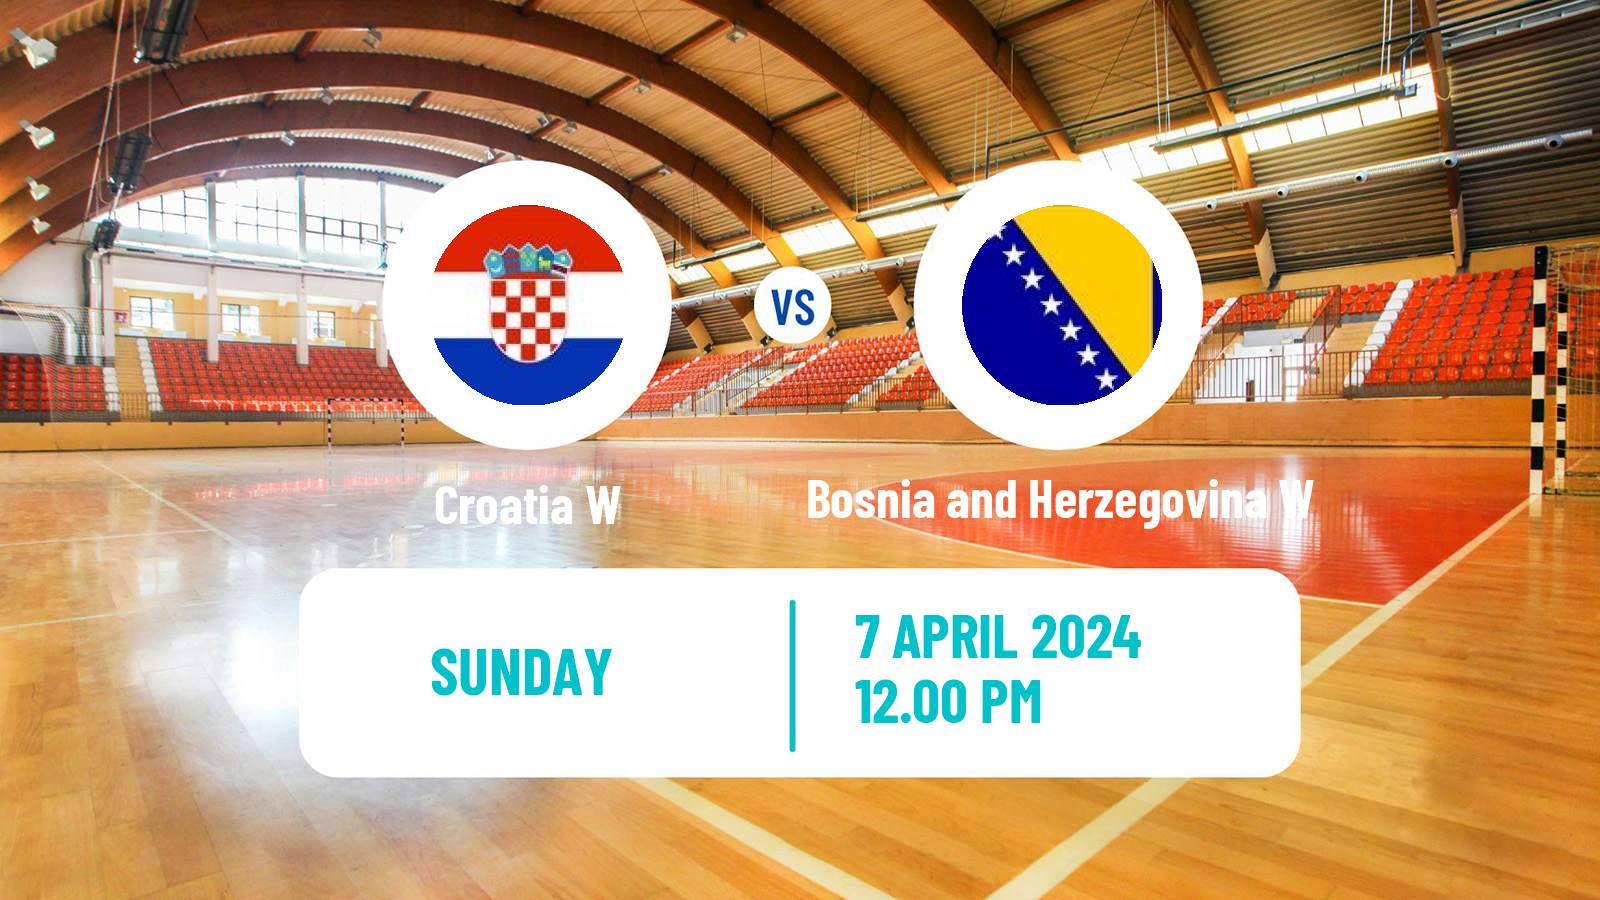 Handball Handball European Championship Women Croatia W - Bosnia and Herzegovina W